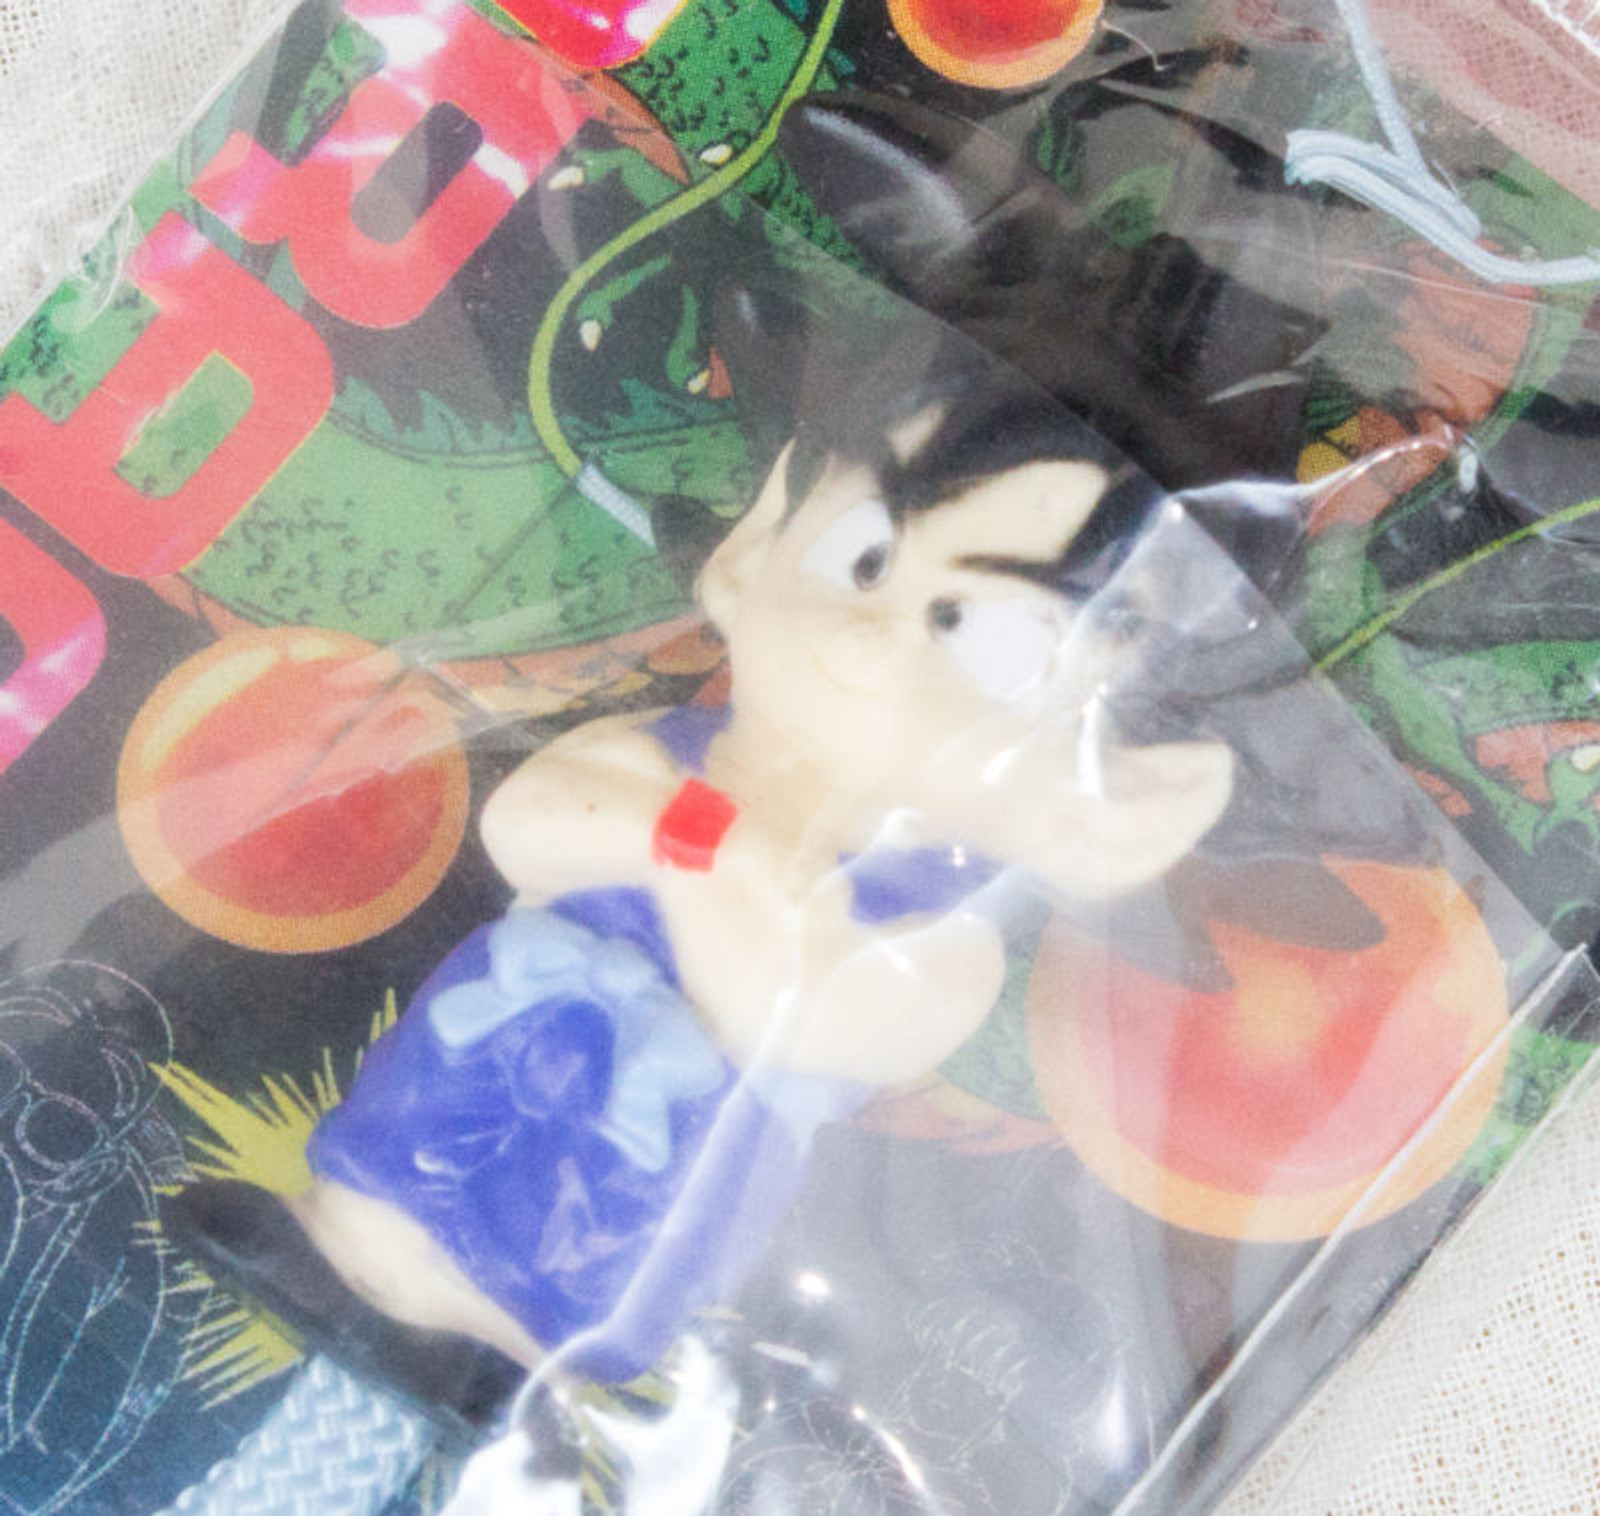 Rare! Dragon Ball Son Gokou Boy Mobile Strap JAPAN ANIME MANGA JUMP